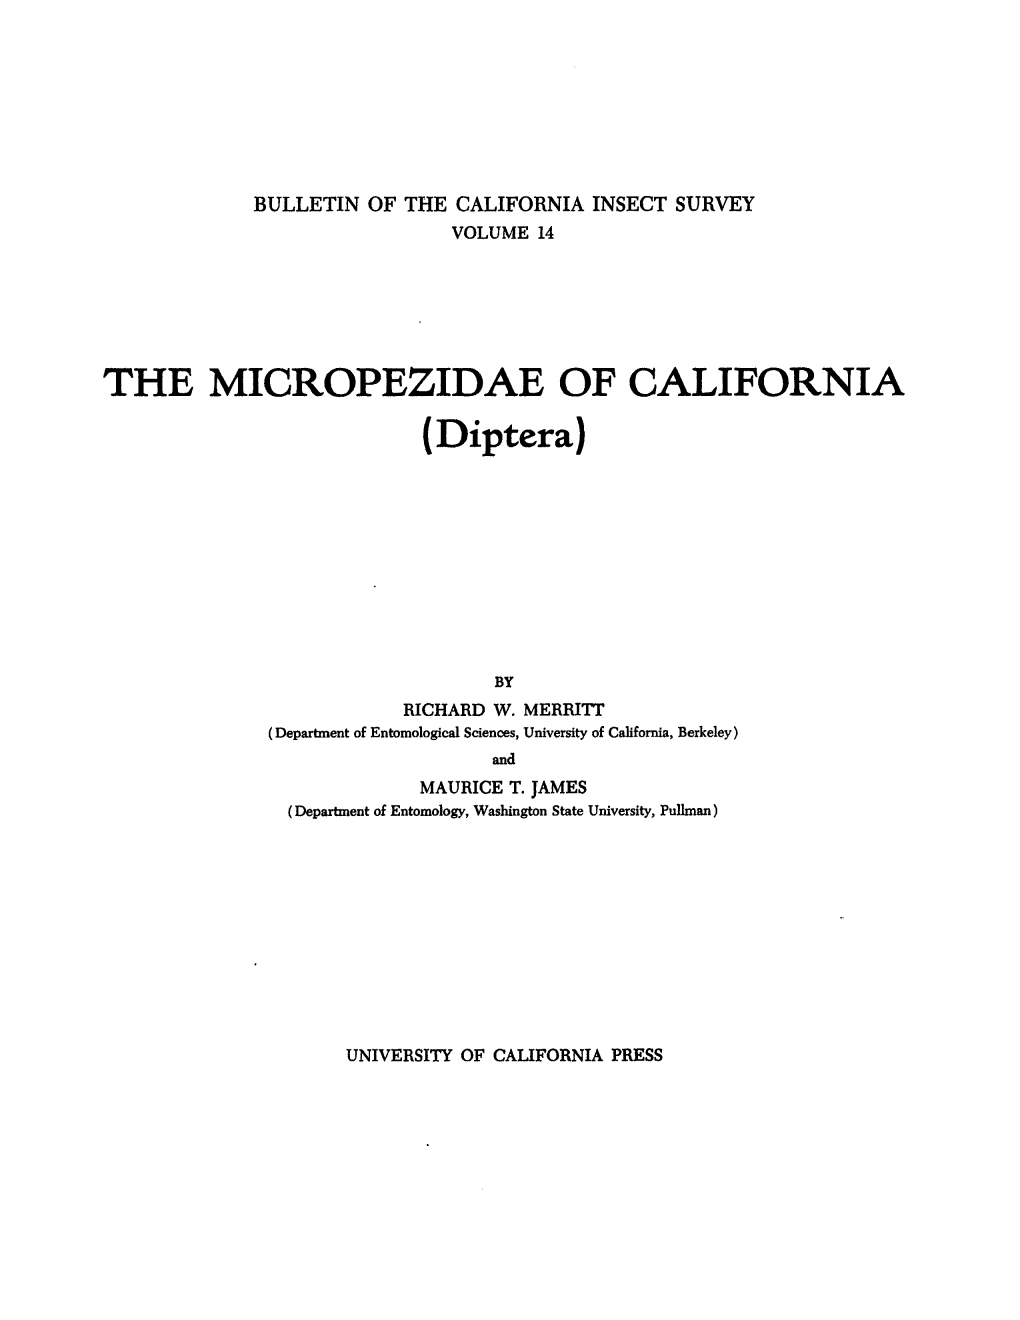 THE MICROPEZIDAE of CALIFORNIA (Diptera)